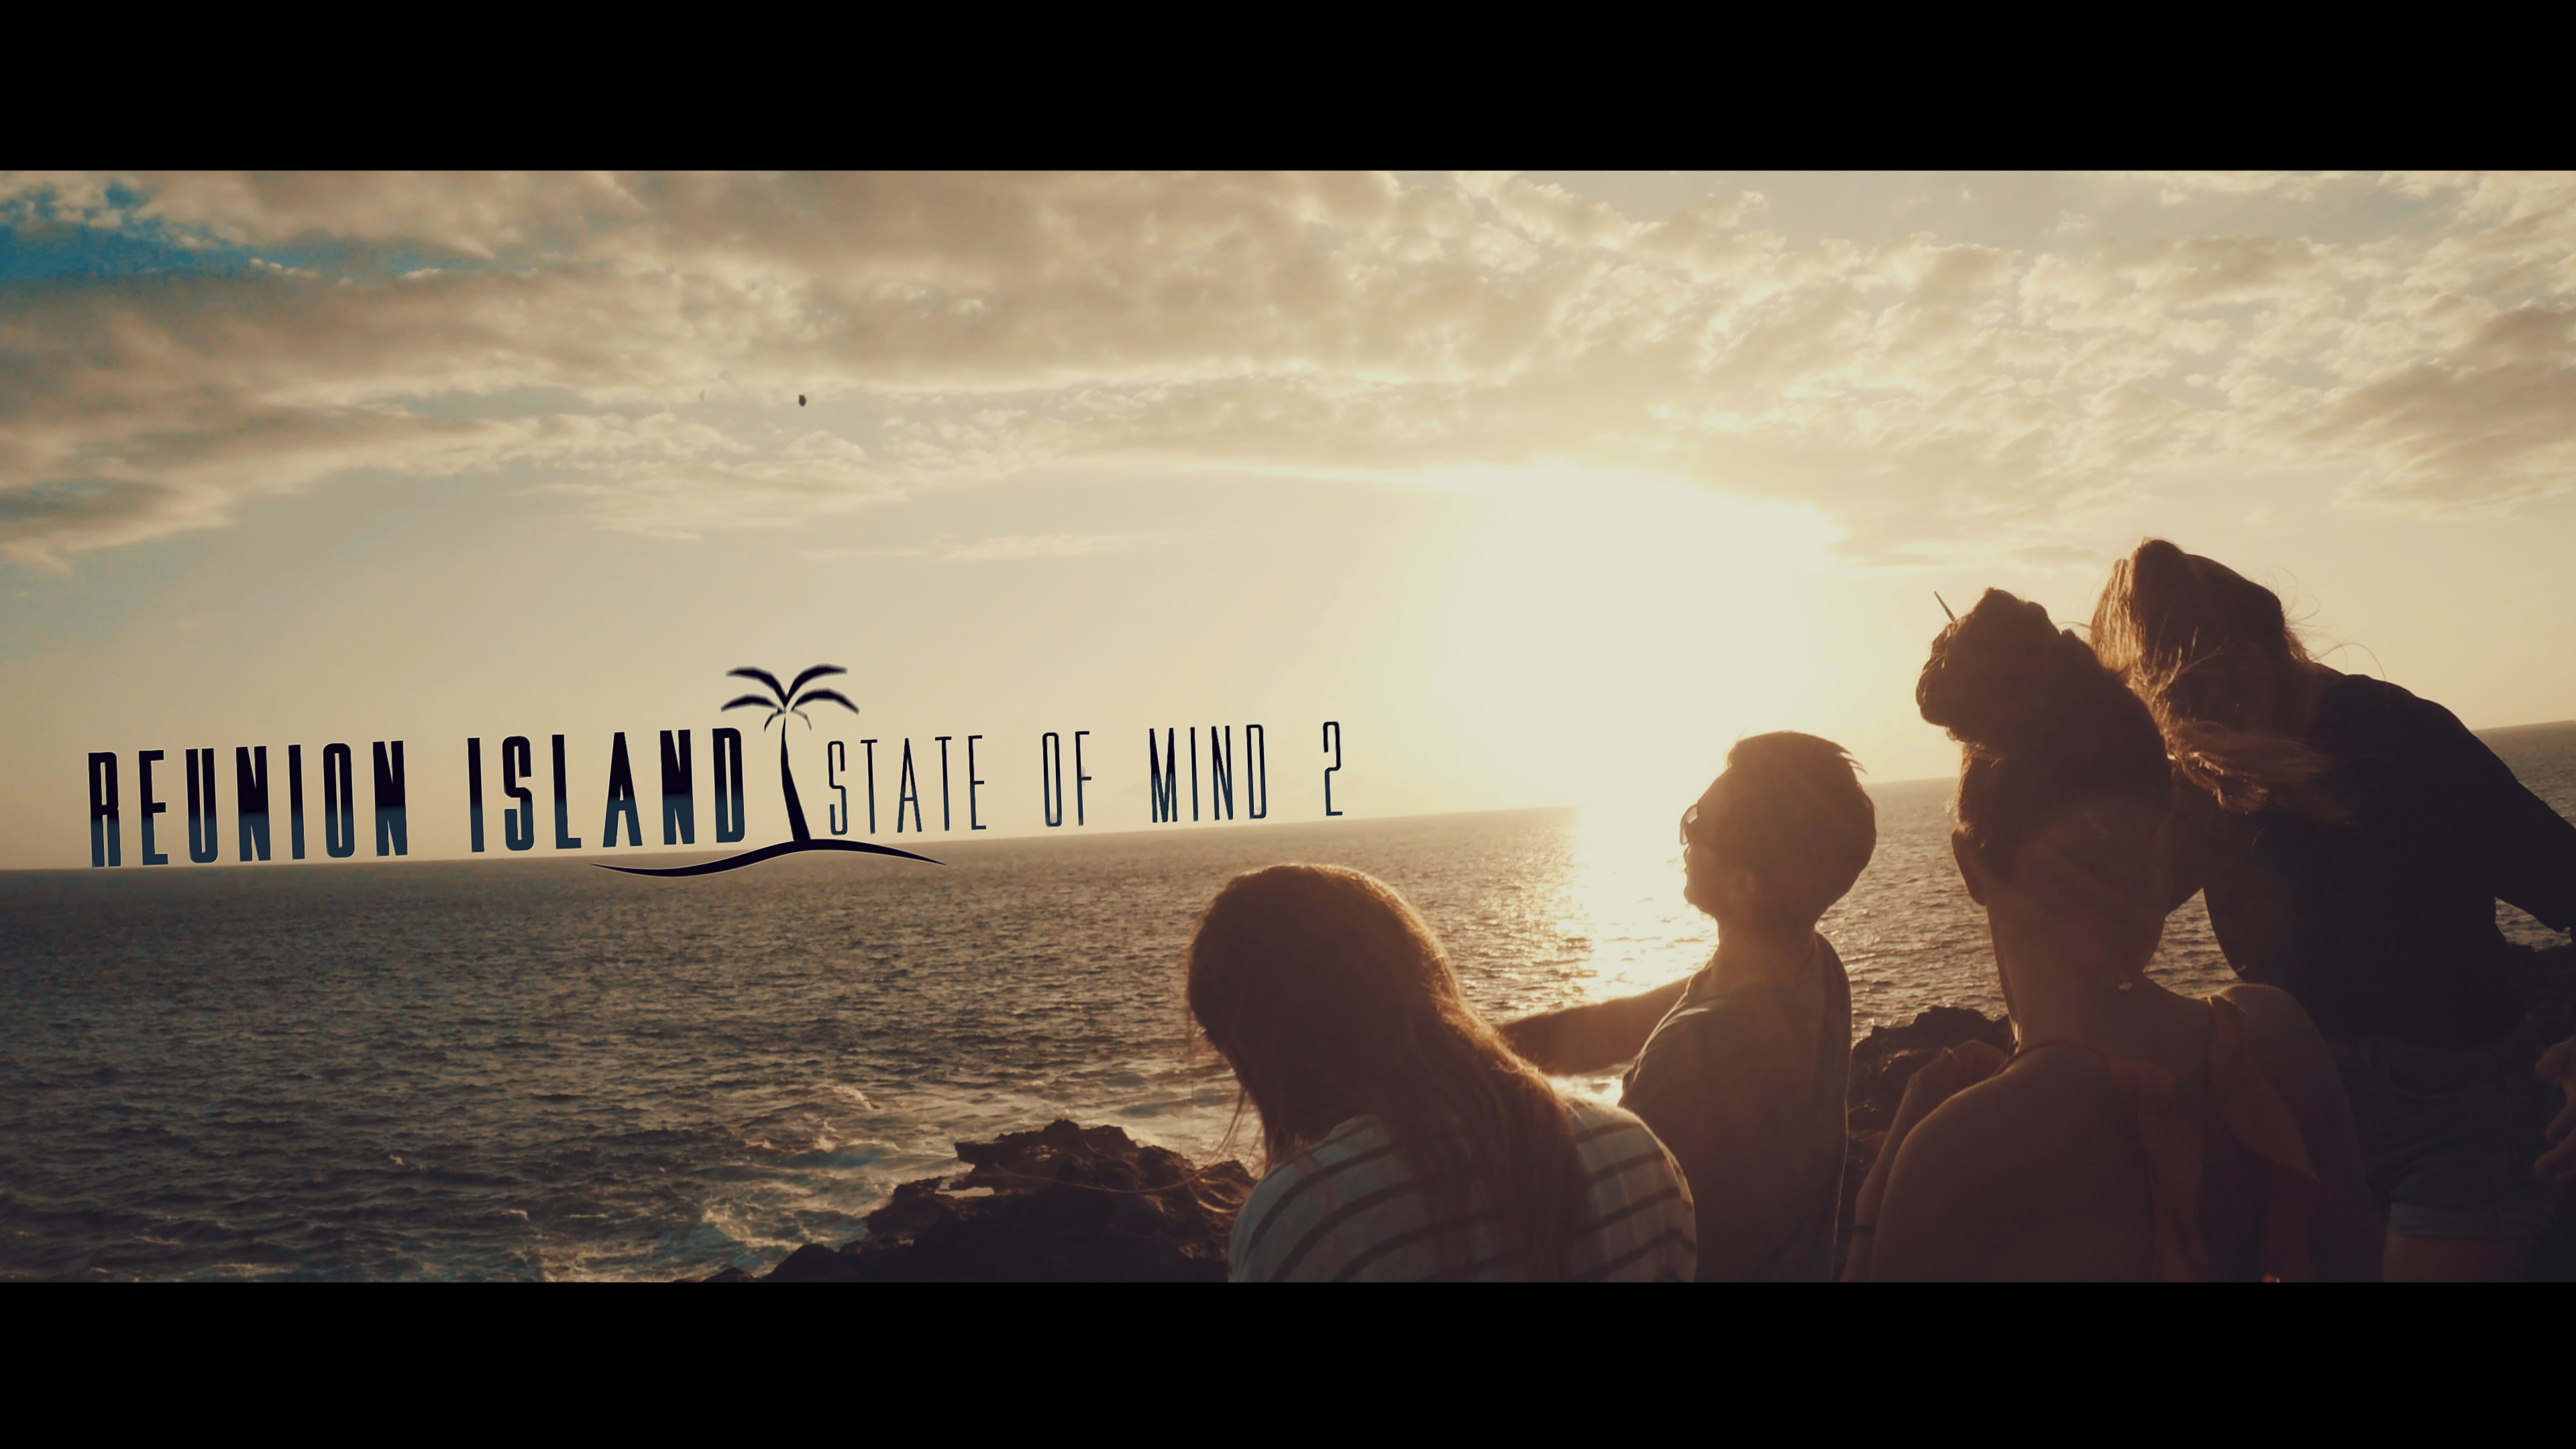 Vidéo : Reunion Island State Of Mind 2